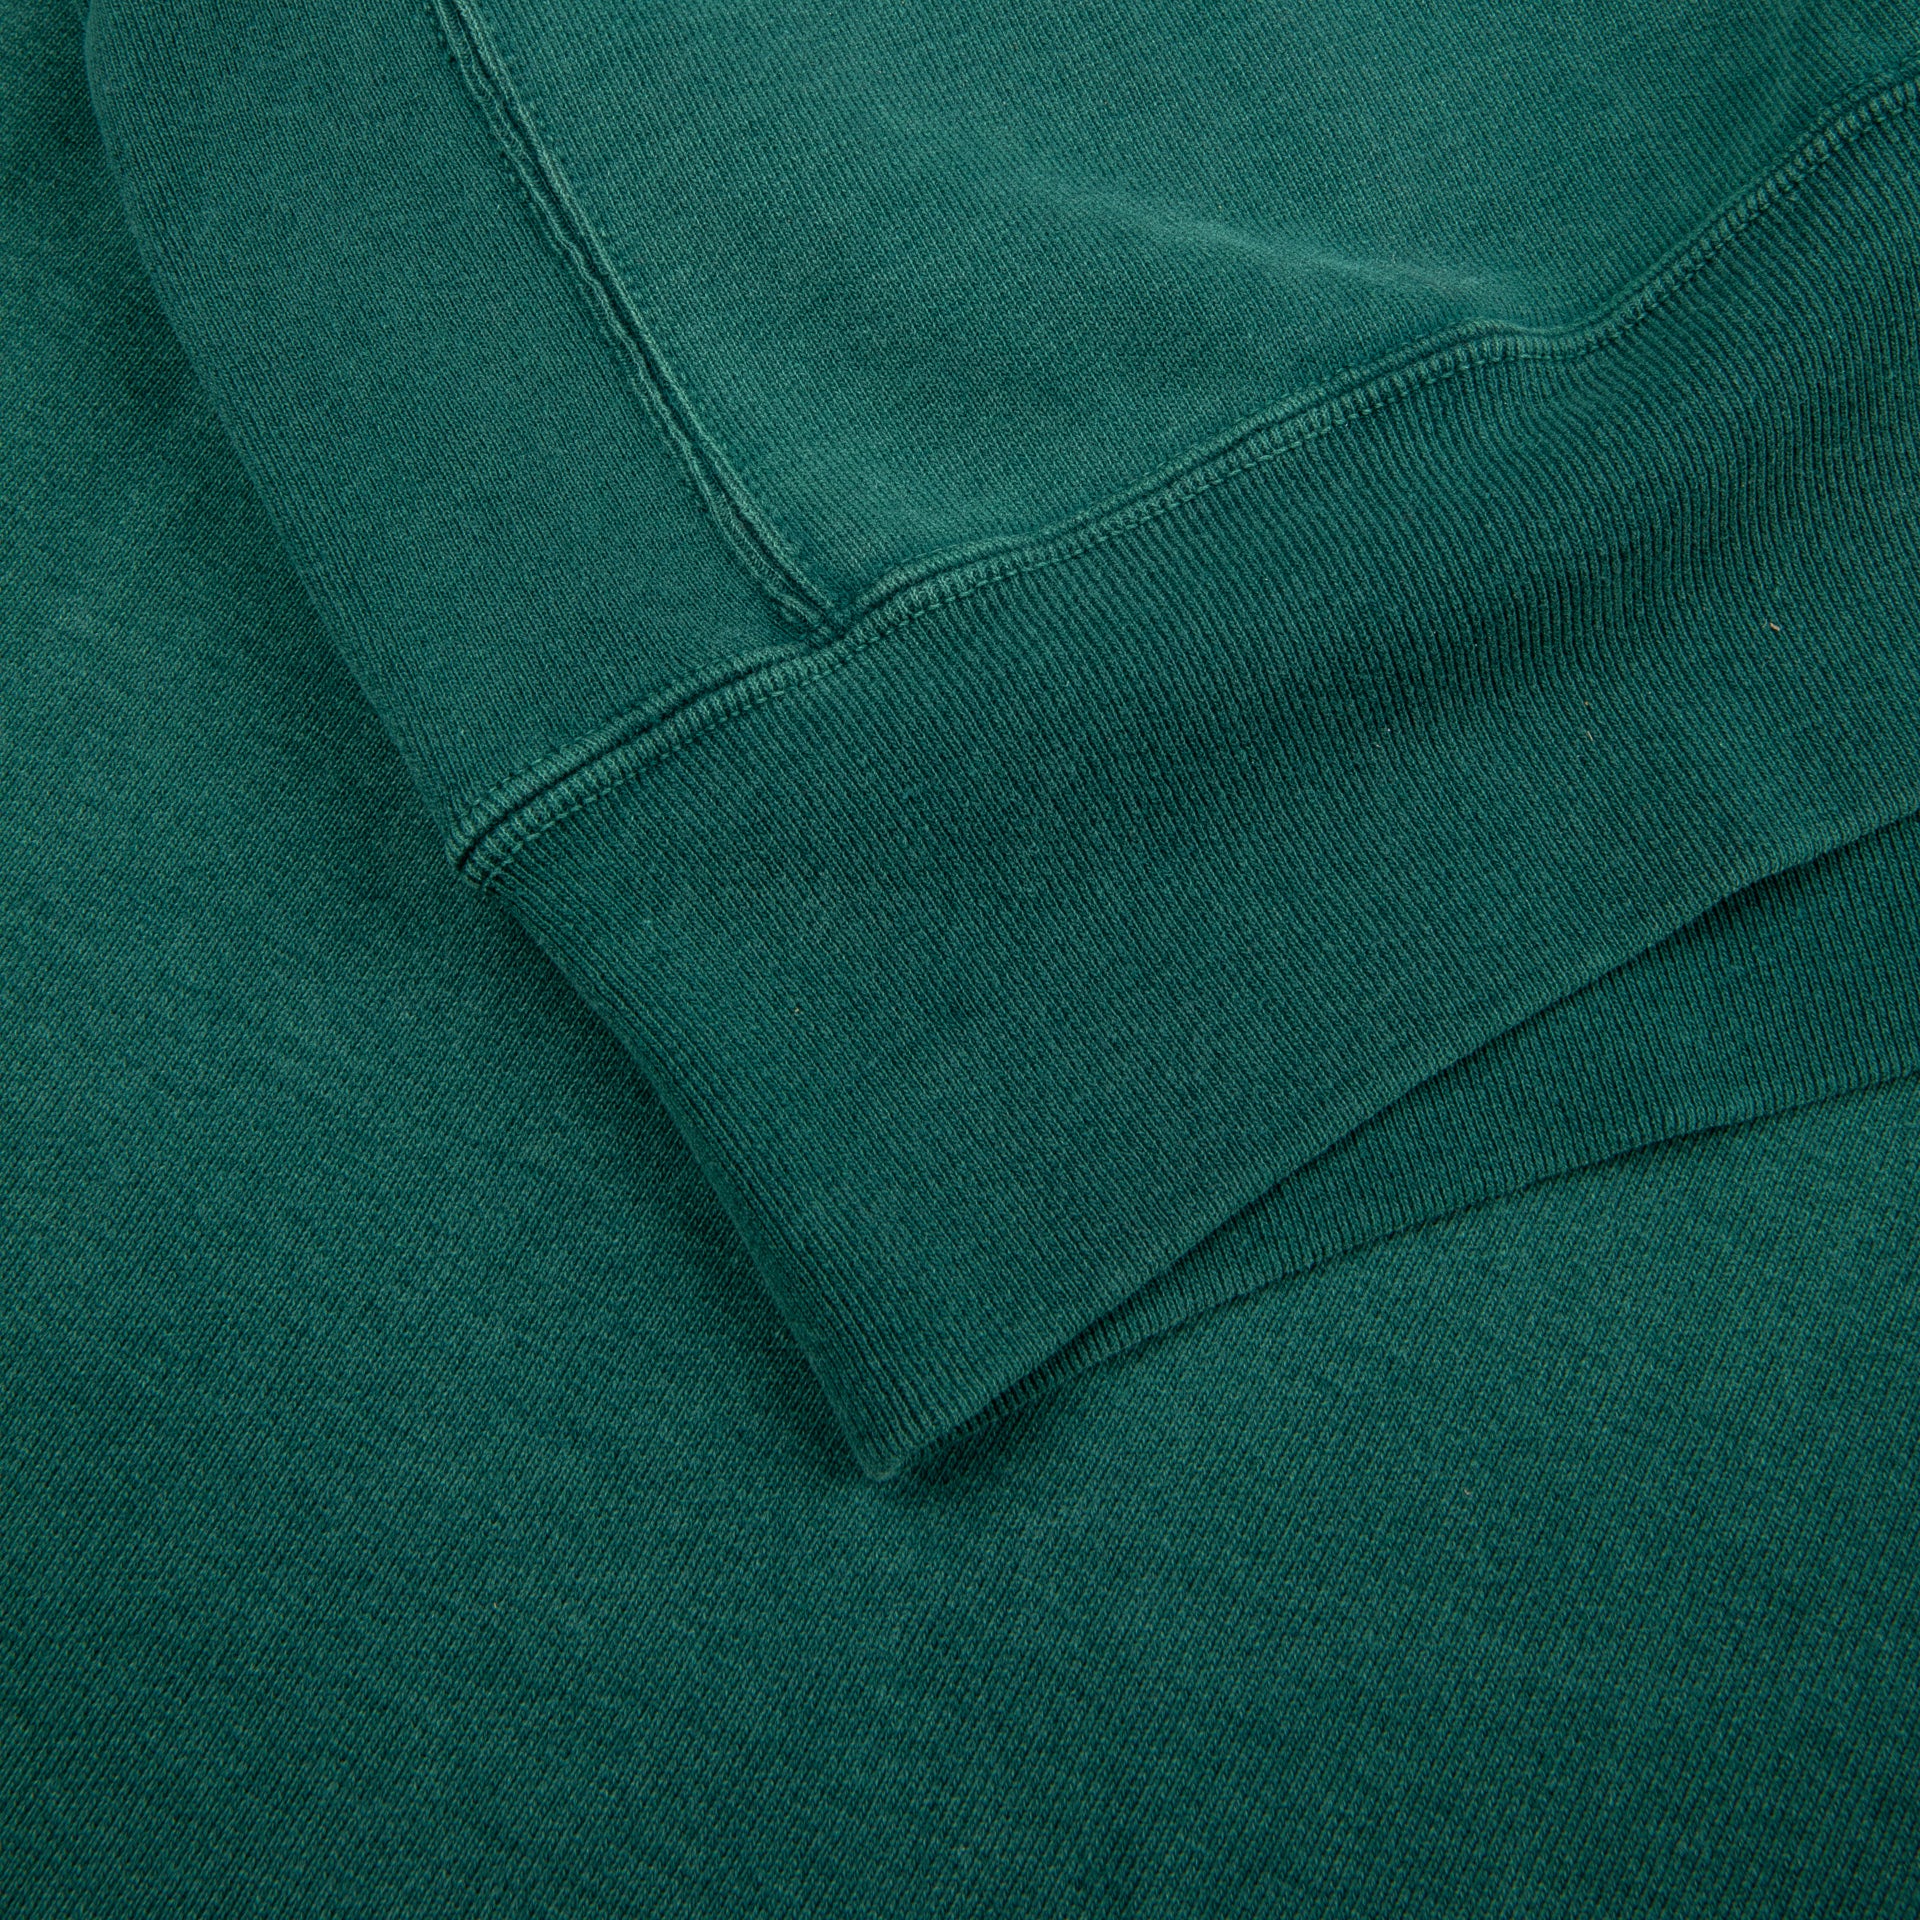 Remi Relief Special Finish Fleece Crew neck sweater Exclusive! Green ...